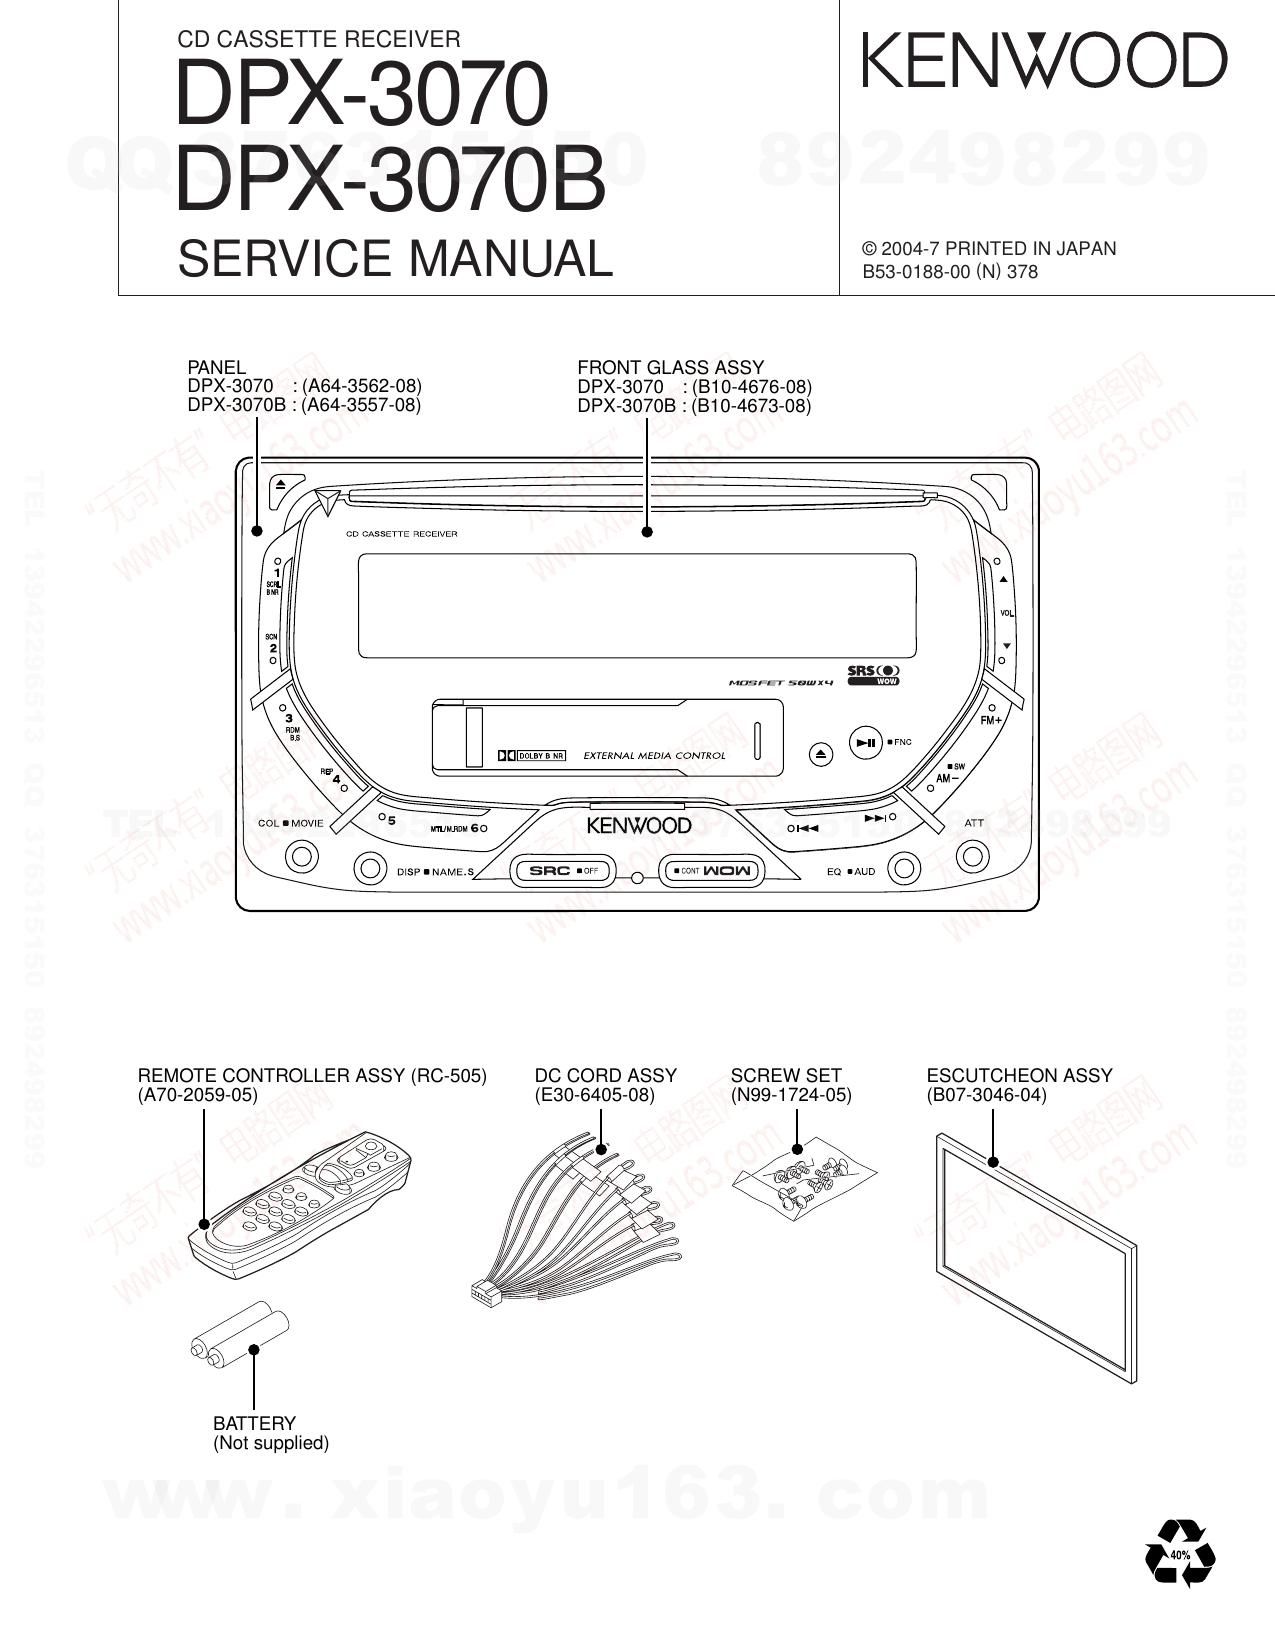 Kenwood DPX 3070 Service Manual